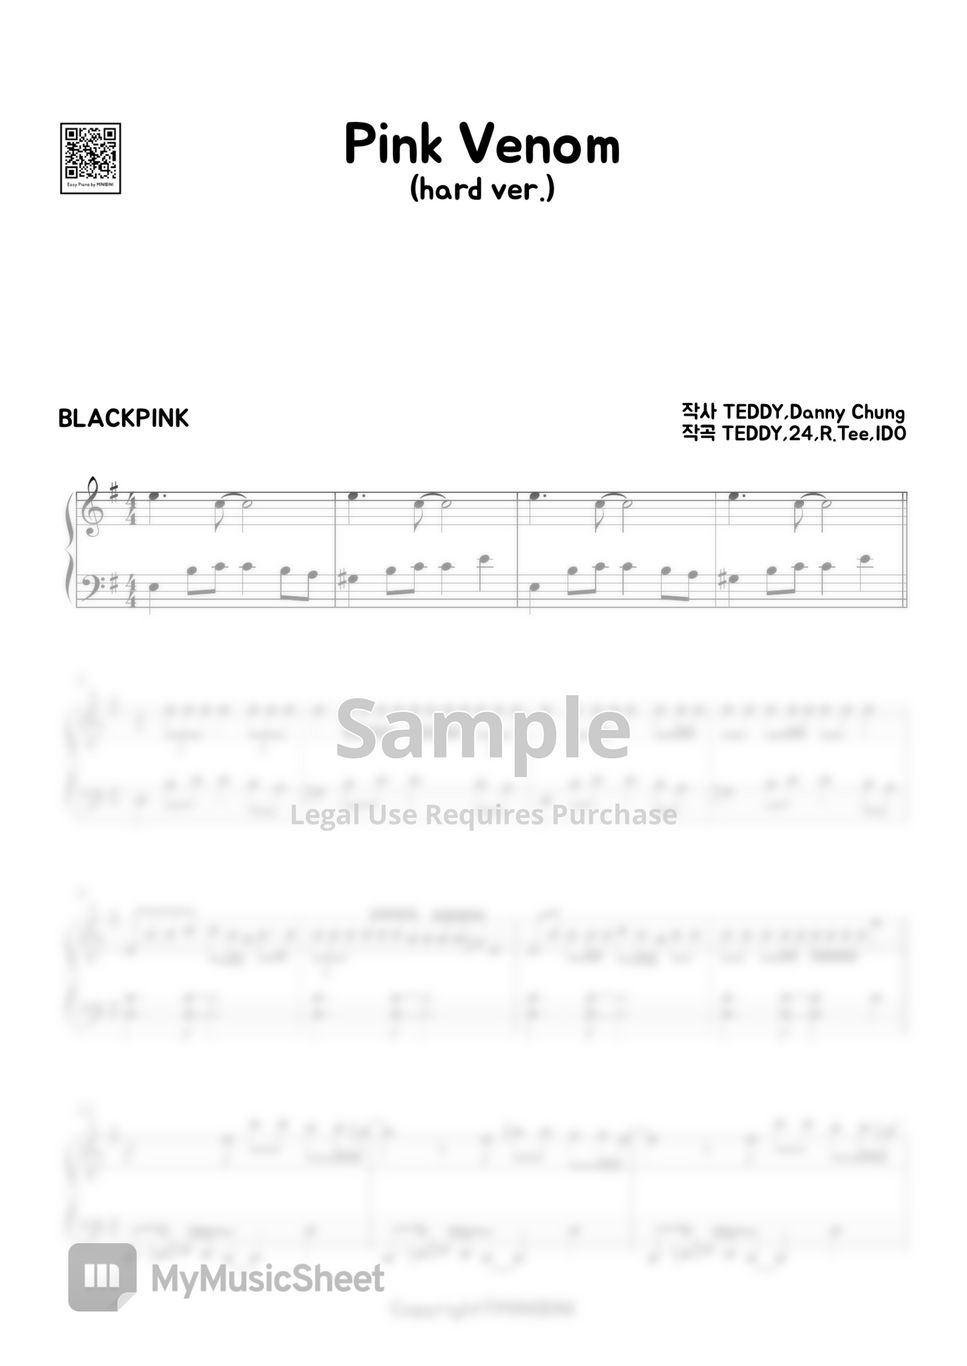 BLACKPINK - Pink Venom (Hard Version) by MINIBINI